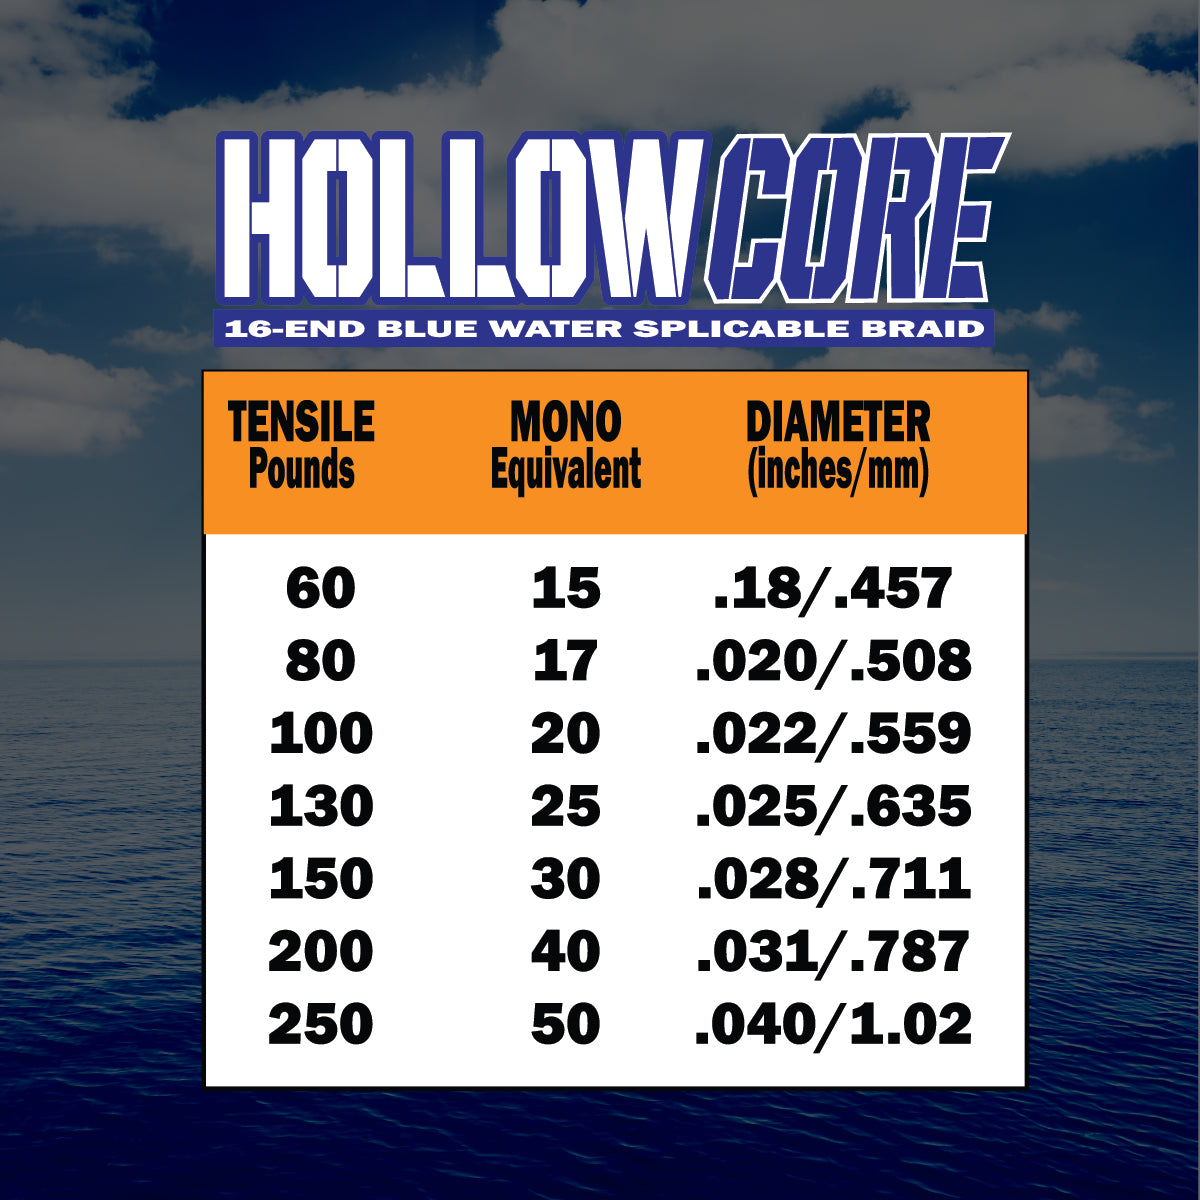 Hollow Core Braid